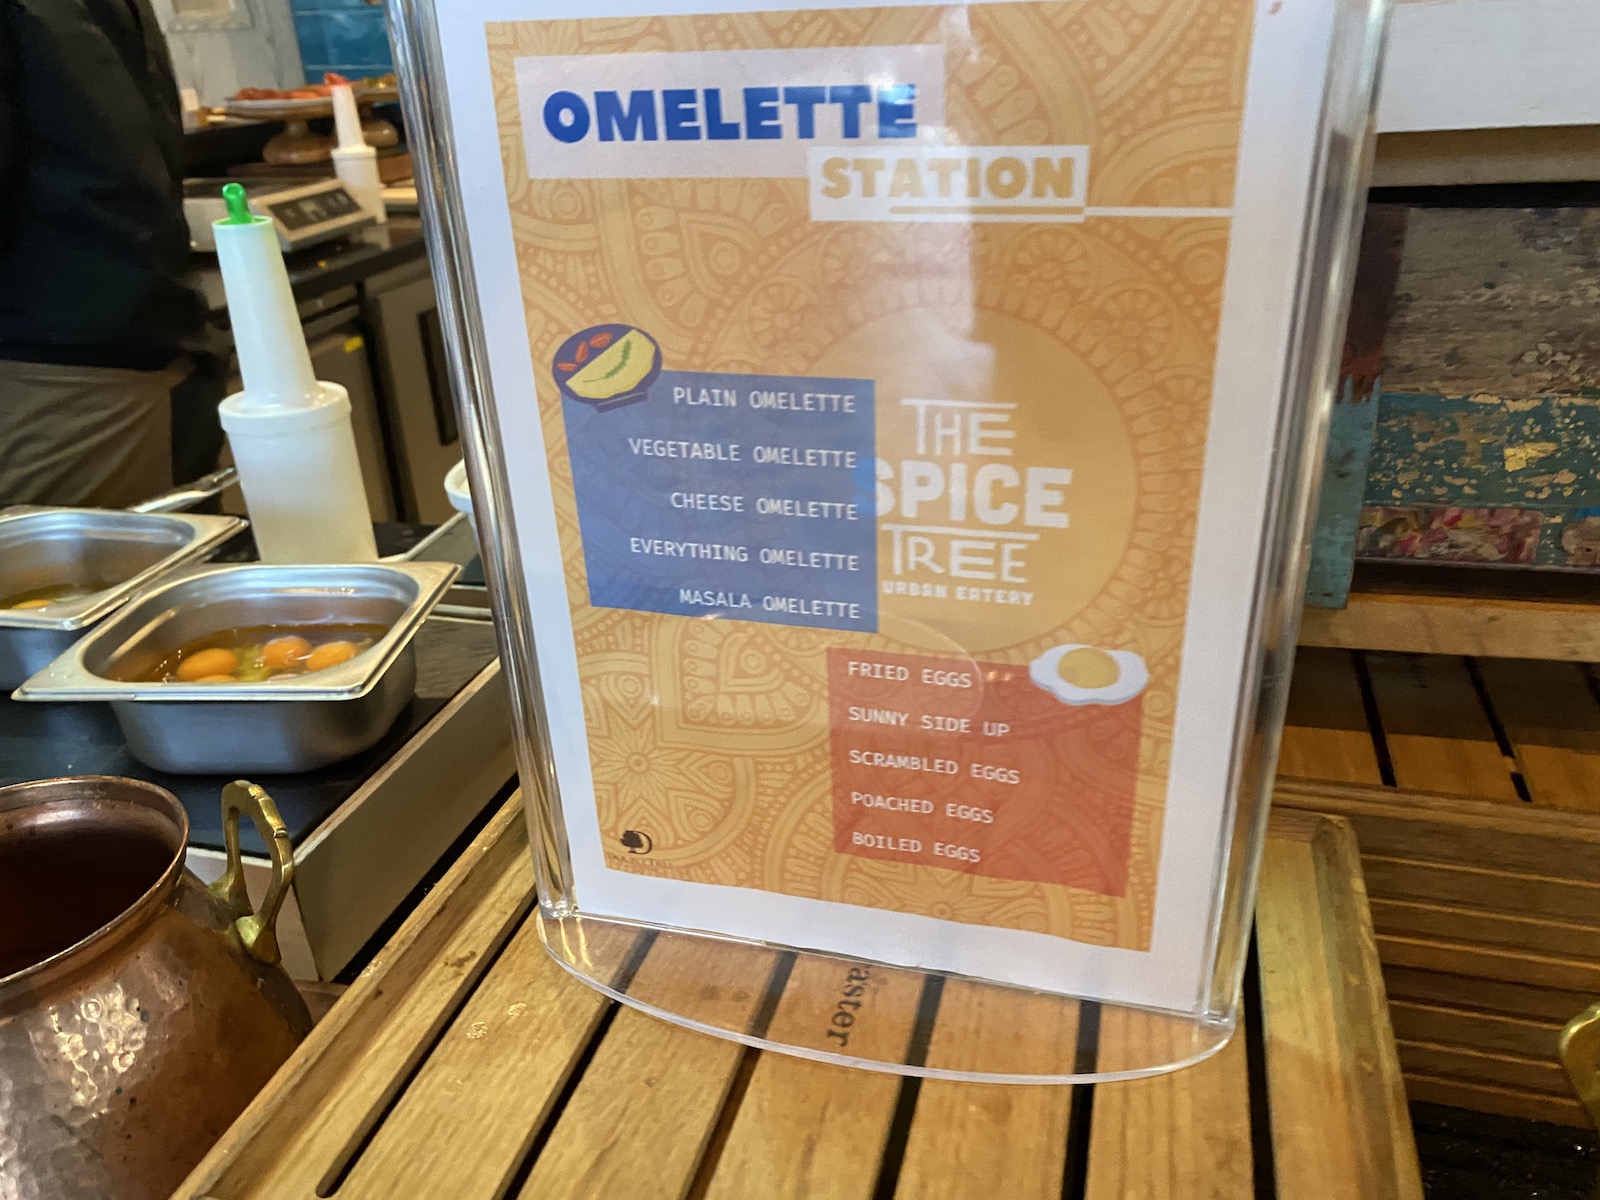 Omelet station sign